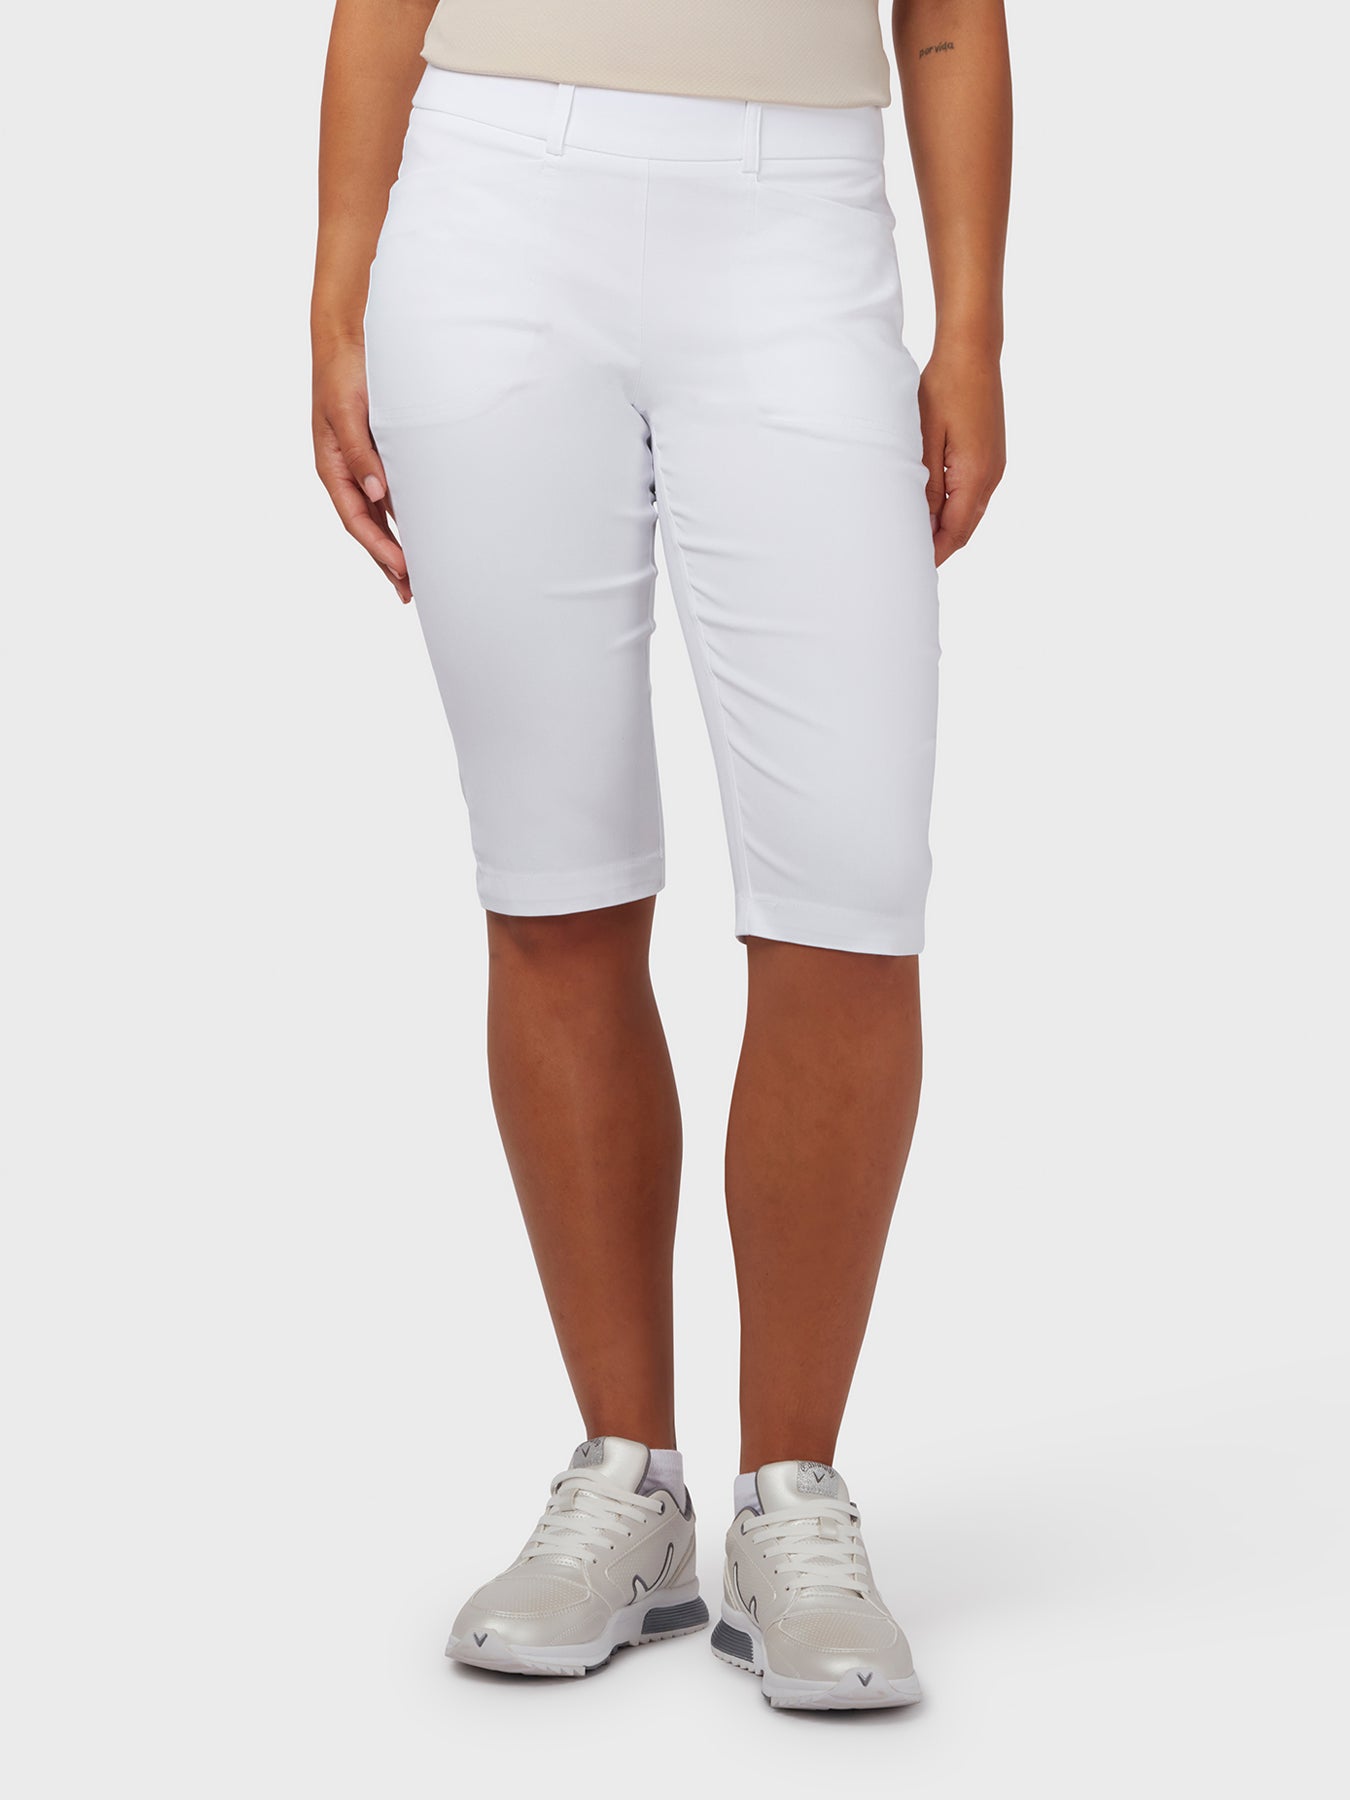 View 34 Truesculpt Womens Shorts In Brilliant White Brilliant White XXL information